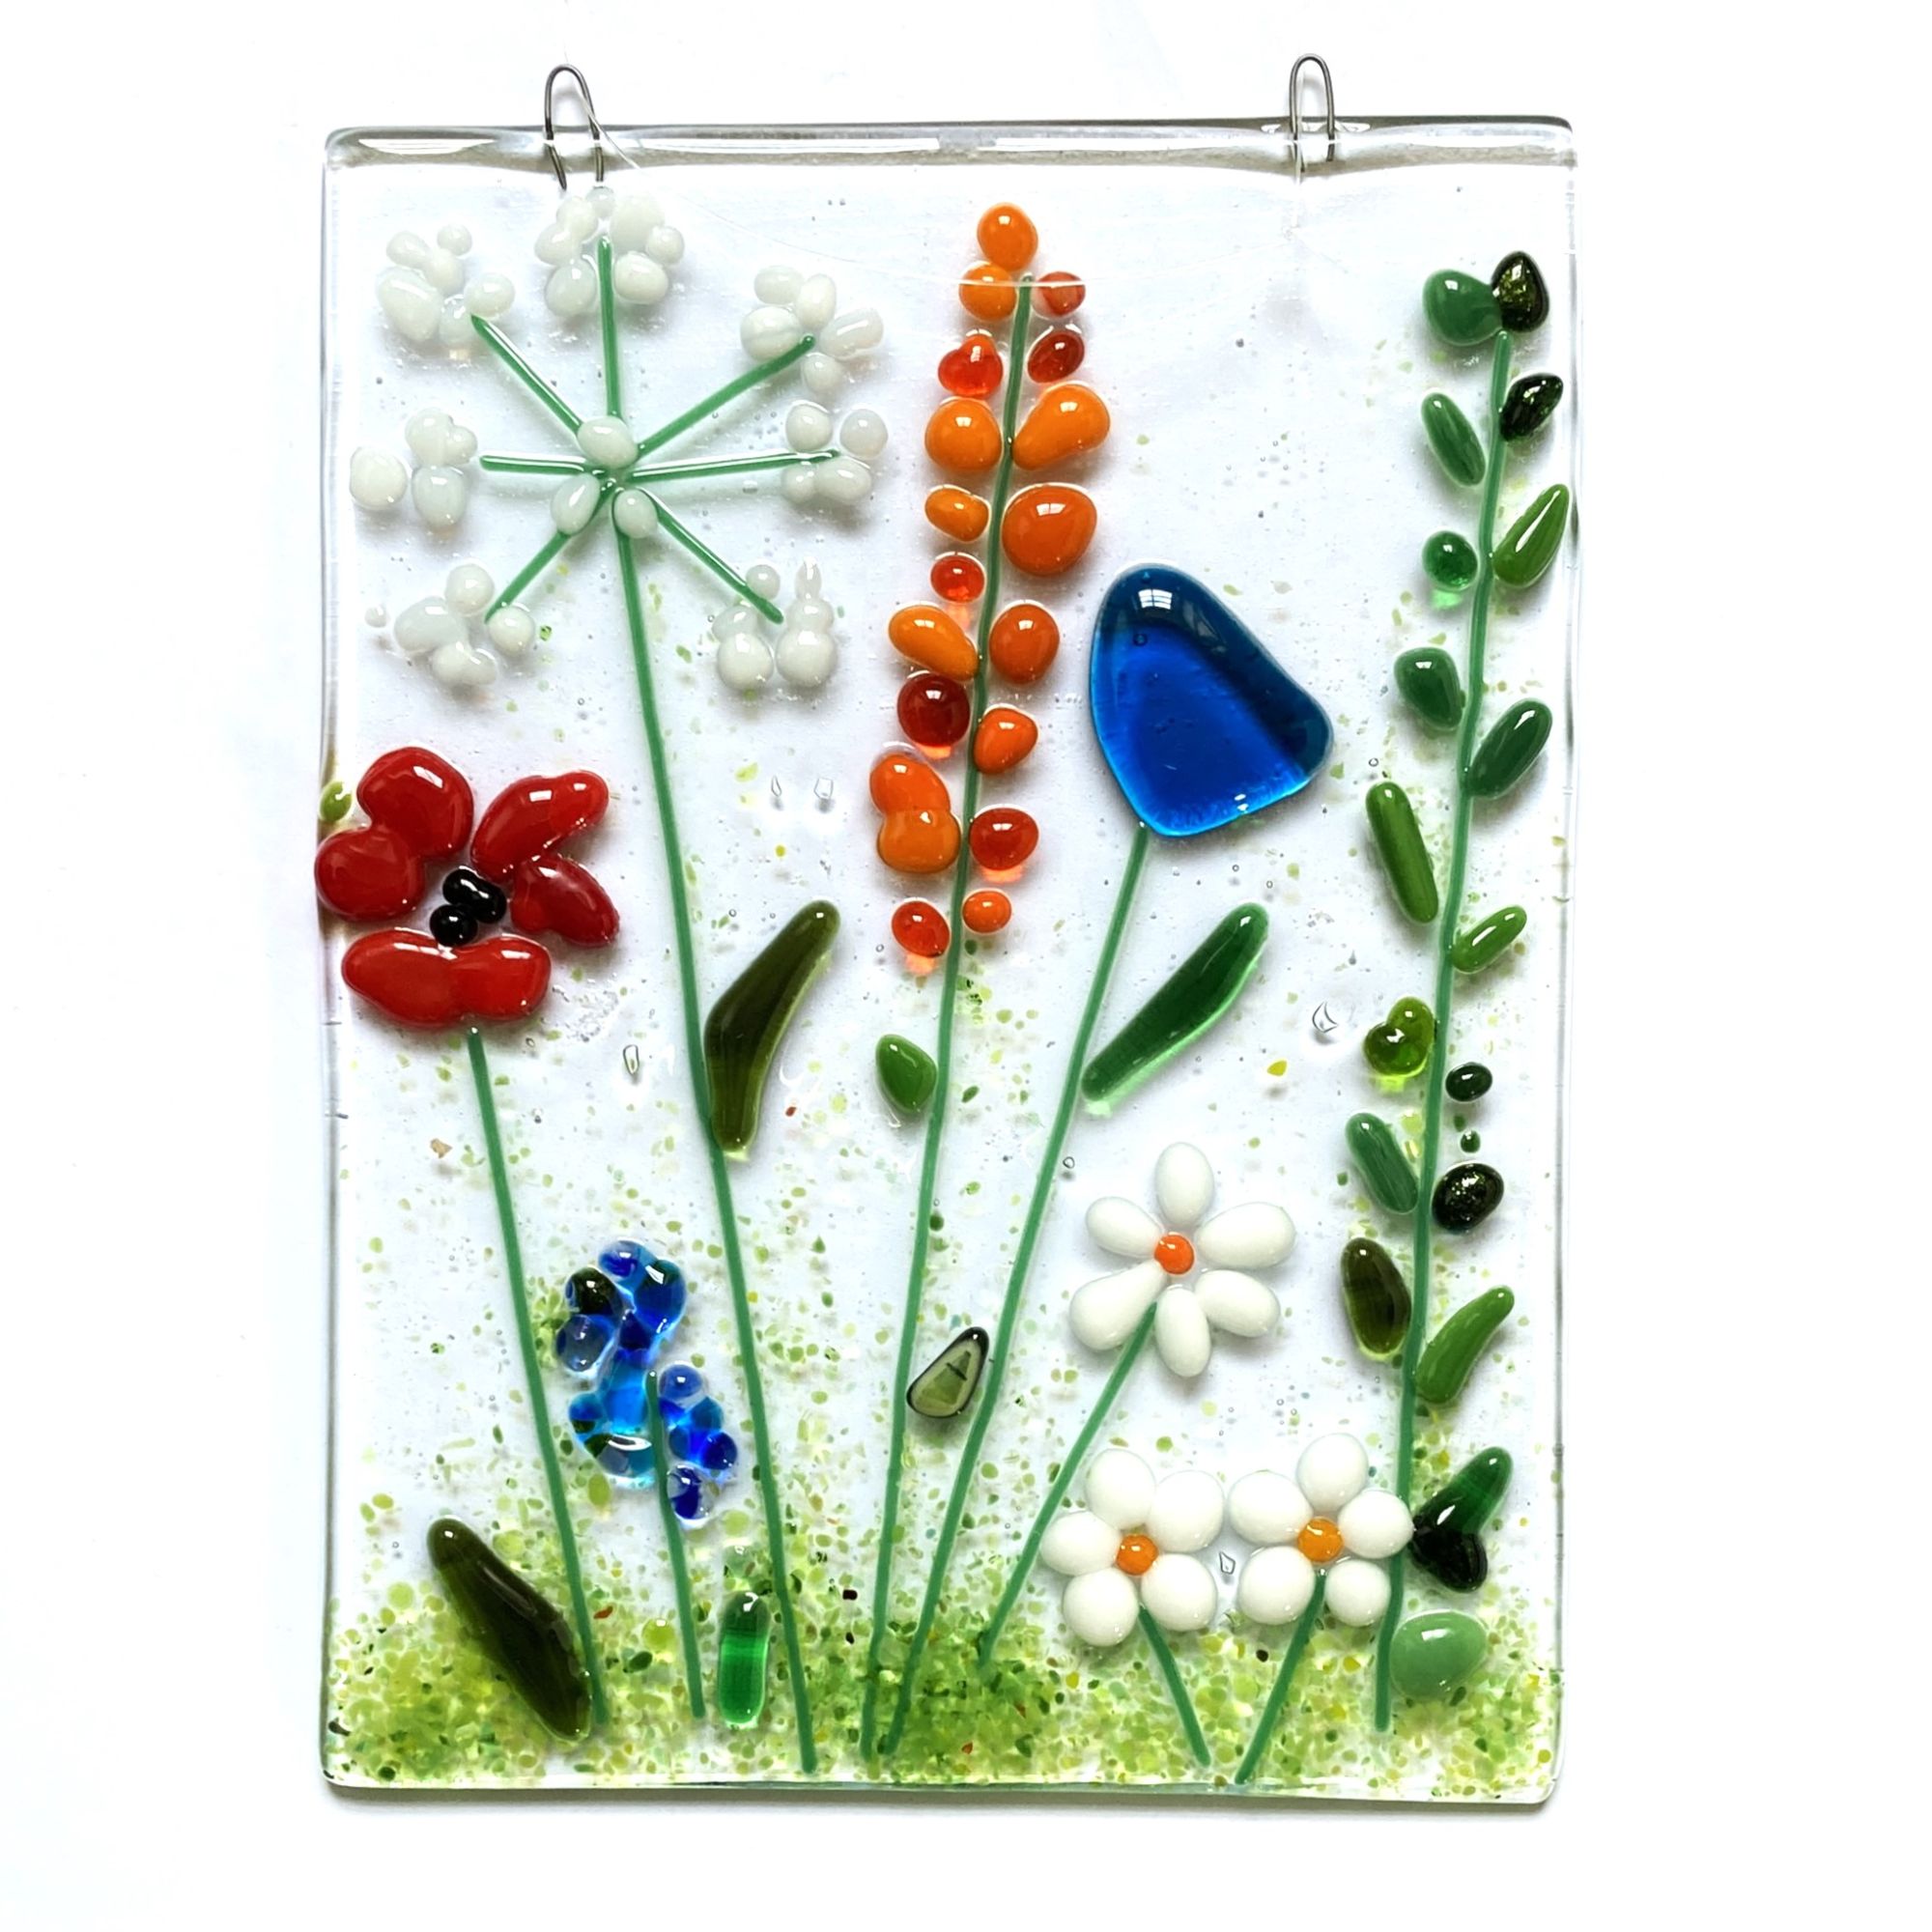 Fused Glass Workshop - Flowers